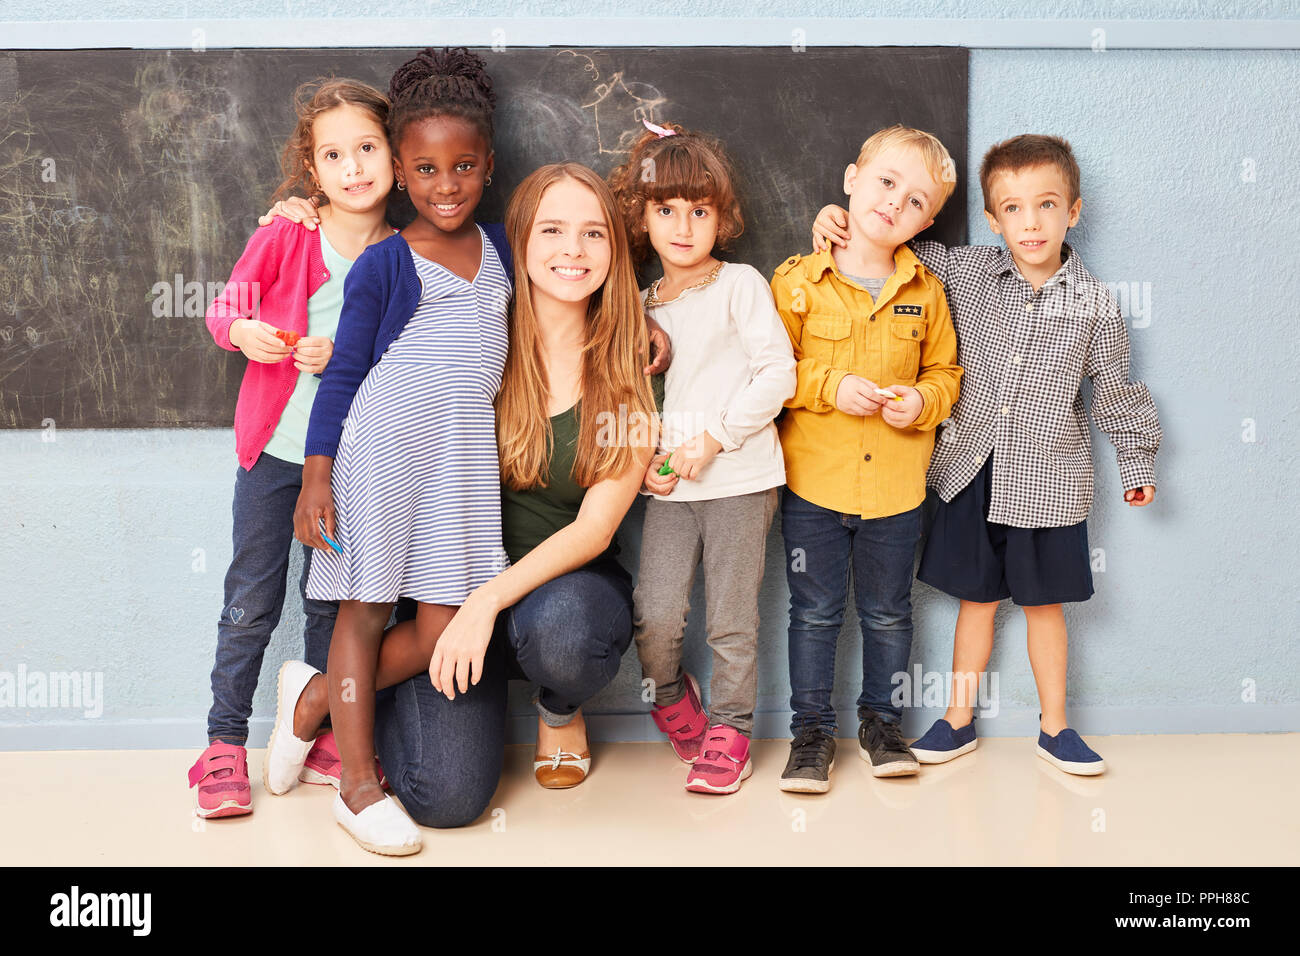 Group of children and teacher as friends together in preschool or kindergarten Stock Photo